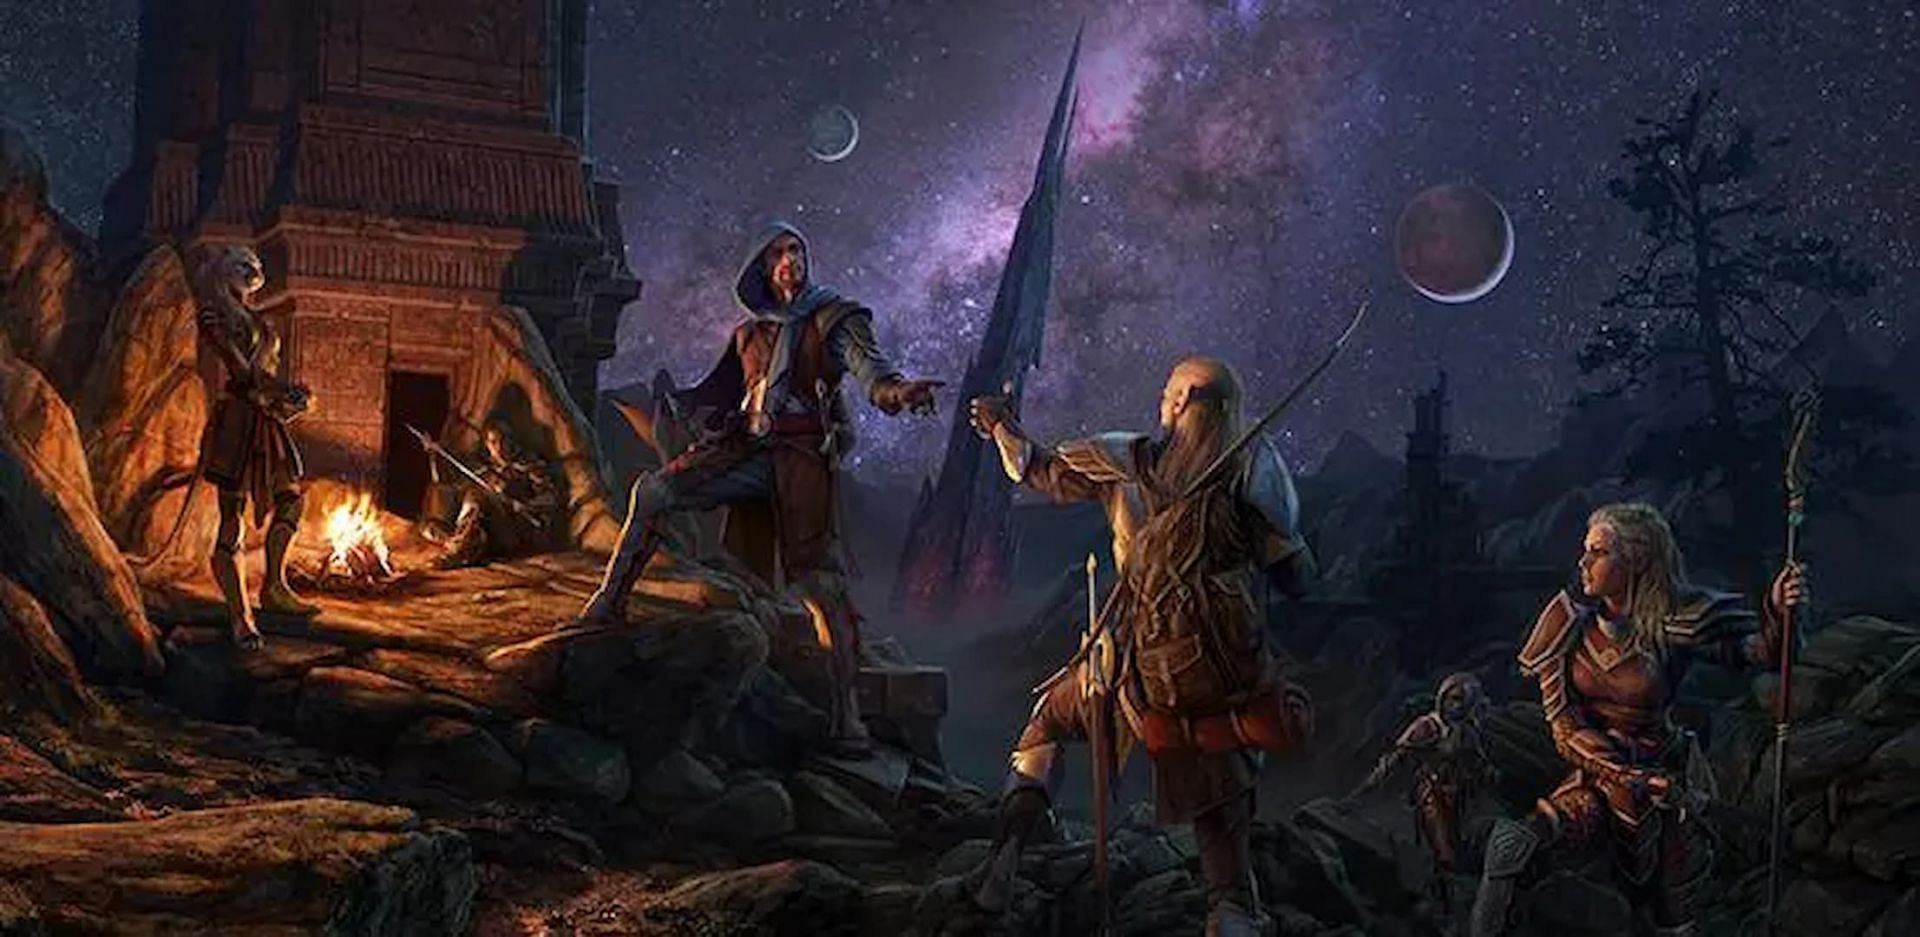 Explore the world with friends after the One Tamriel update in The Elder Scrolls Online. (Image via ZeniMax Online Studios)